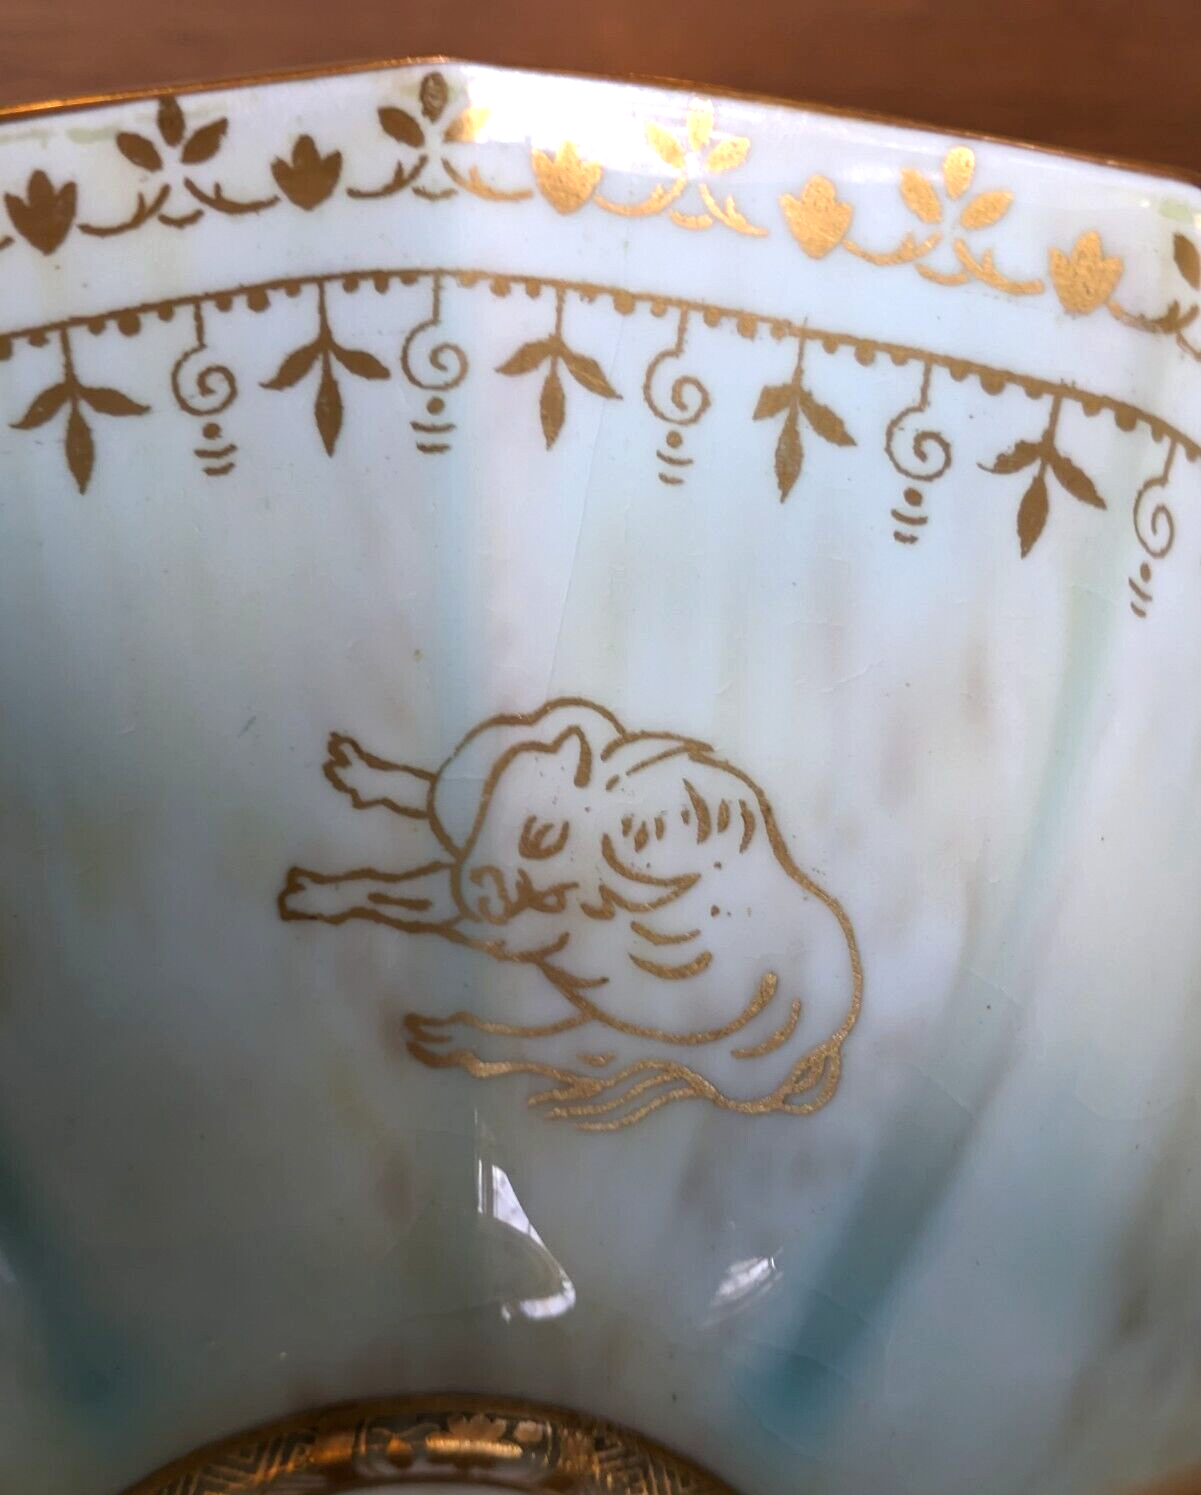 Wedgwood Oriental Fairyland Lustre Octagonal Bowl Daisy Makeig Jones Antique